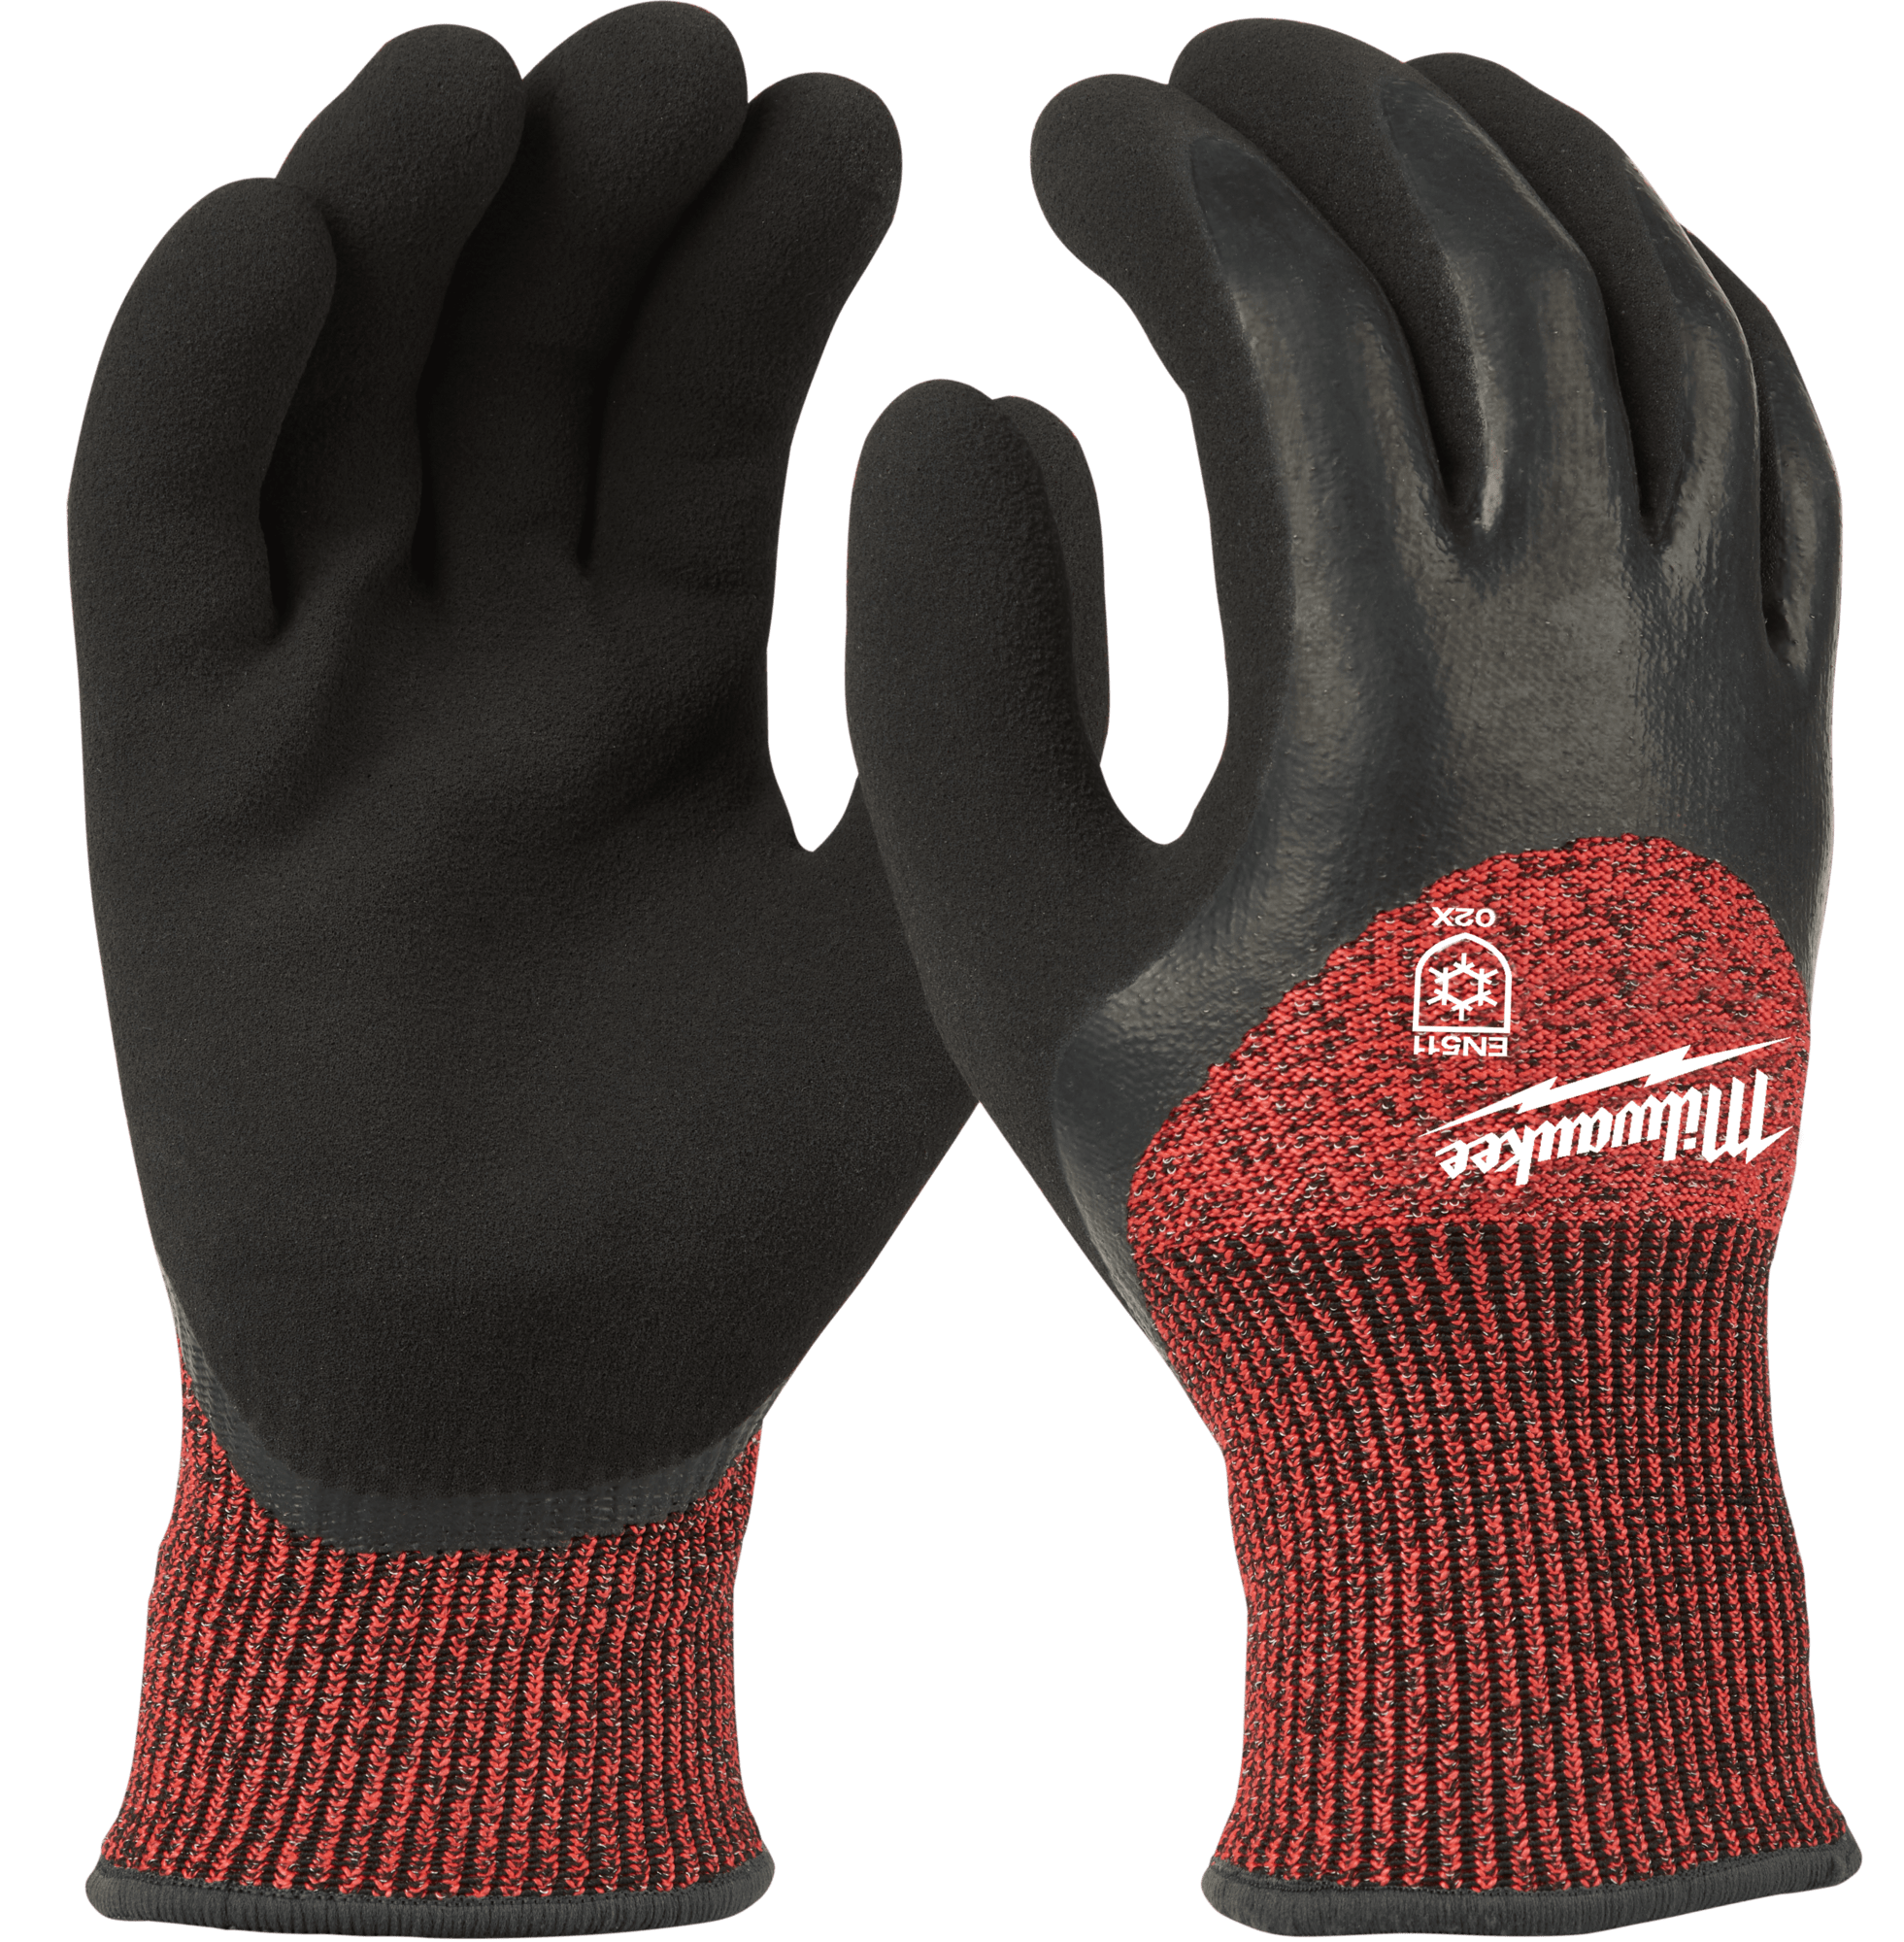 MILWAUKEE Zimné rukavice odolné proti prerezaniu Stupeň 3 S/7